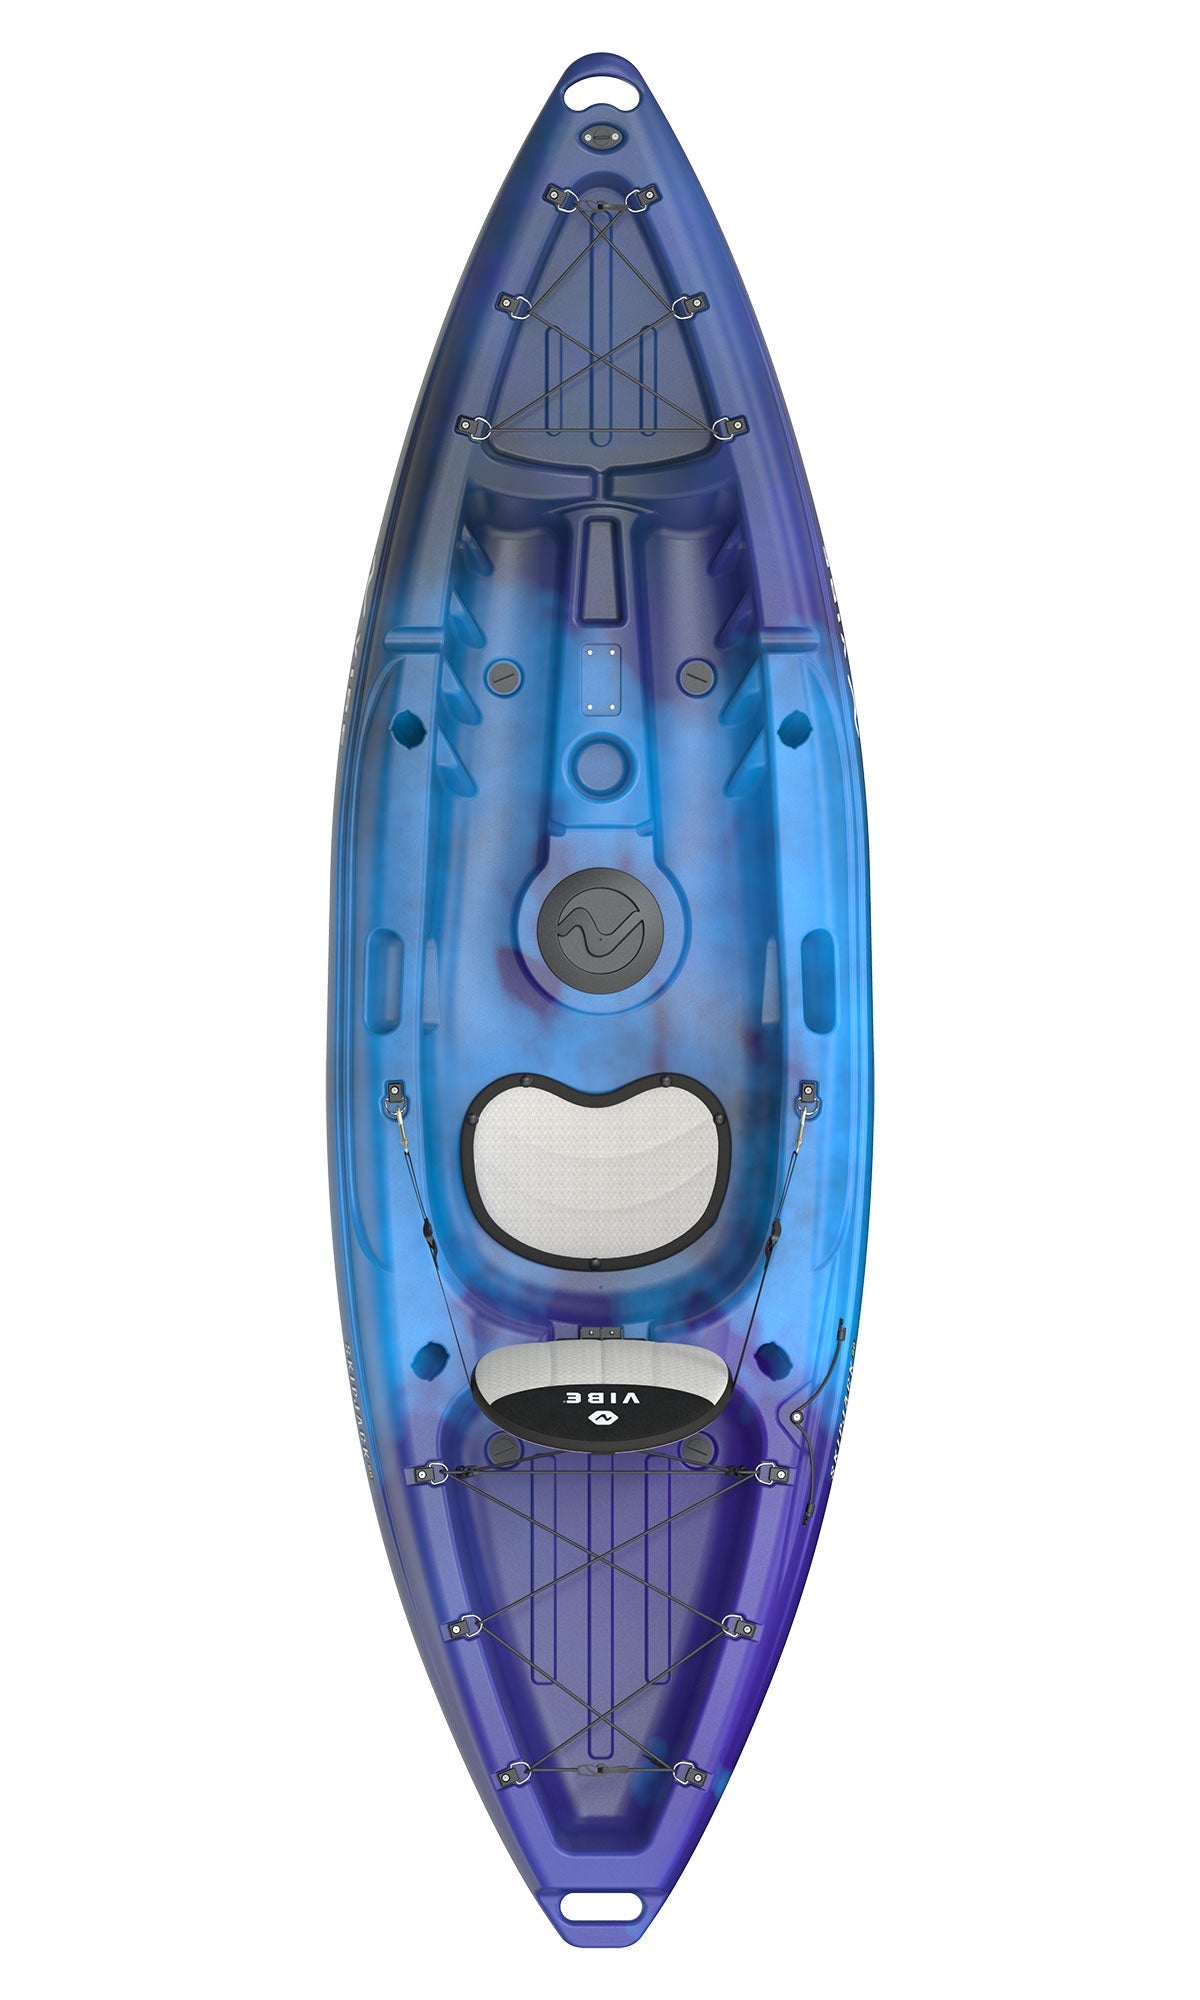 Small fishing tackle box for your kayak - Galaxy Kayaks